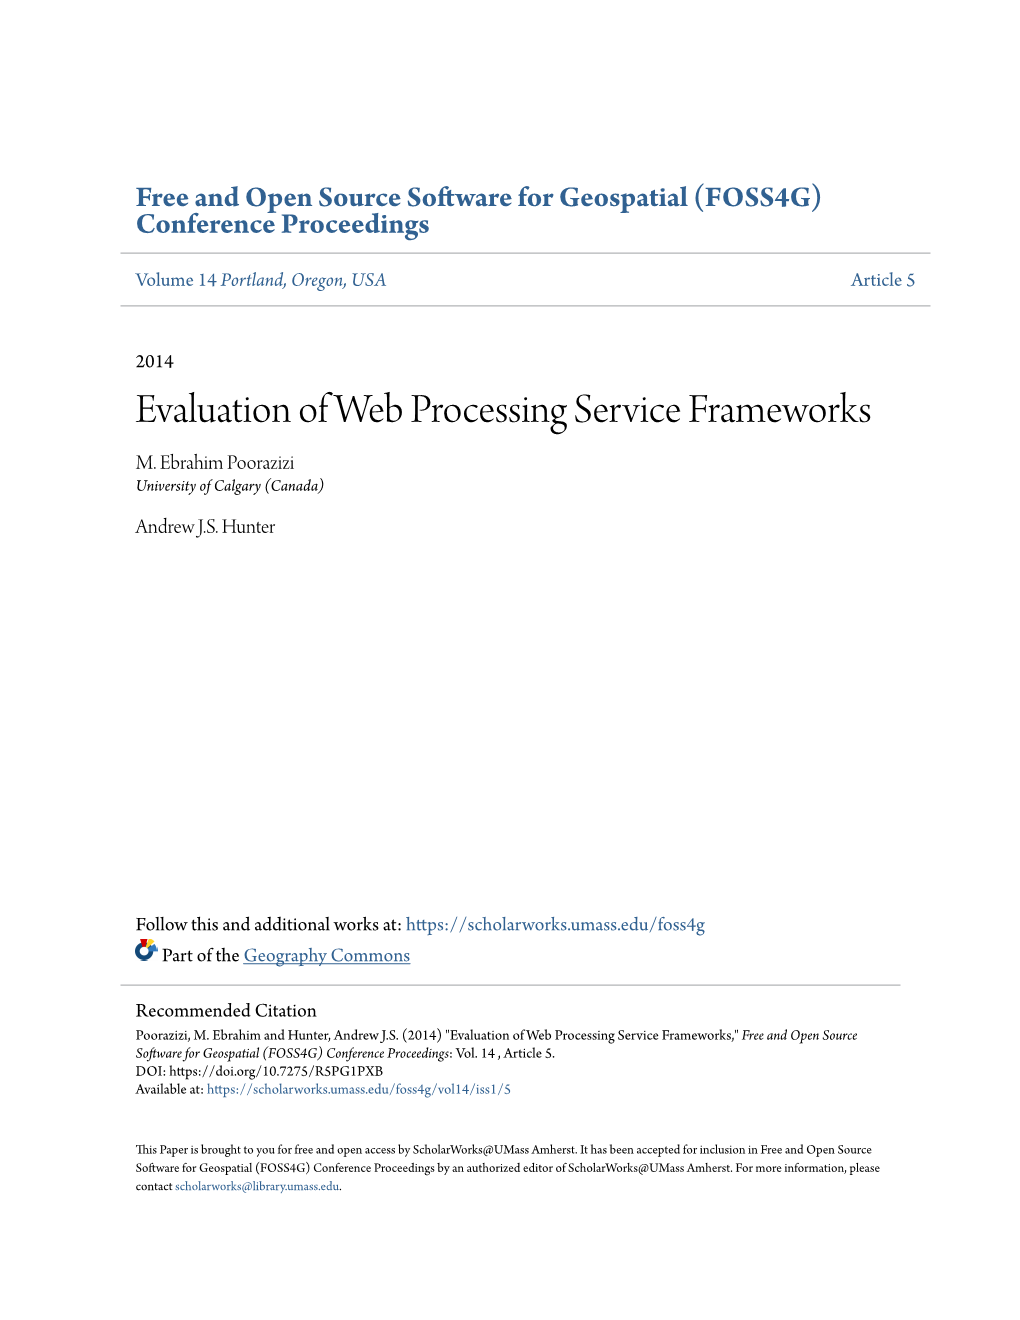 Evaluation Ofweb Processing Service Frameworks